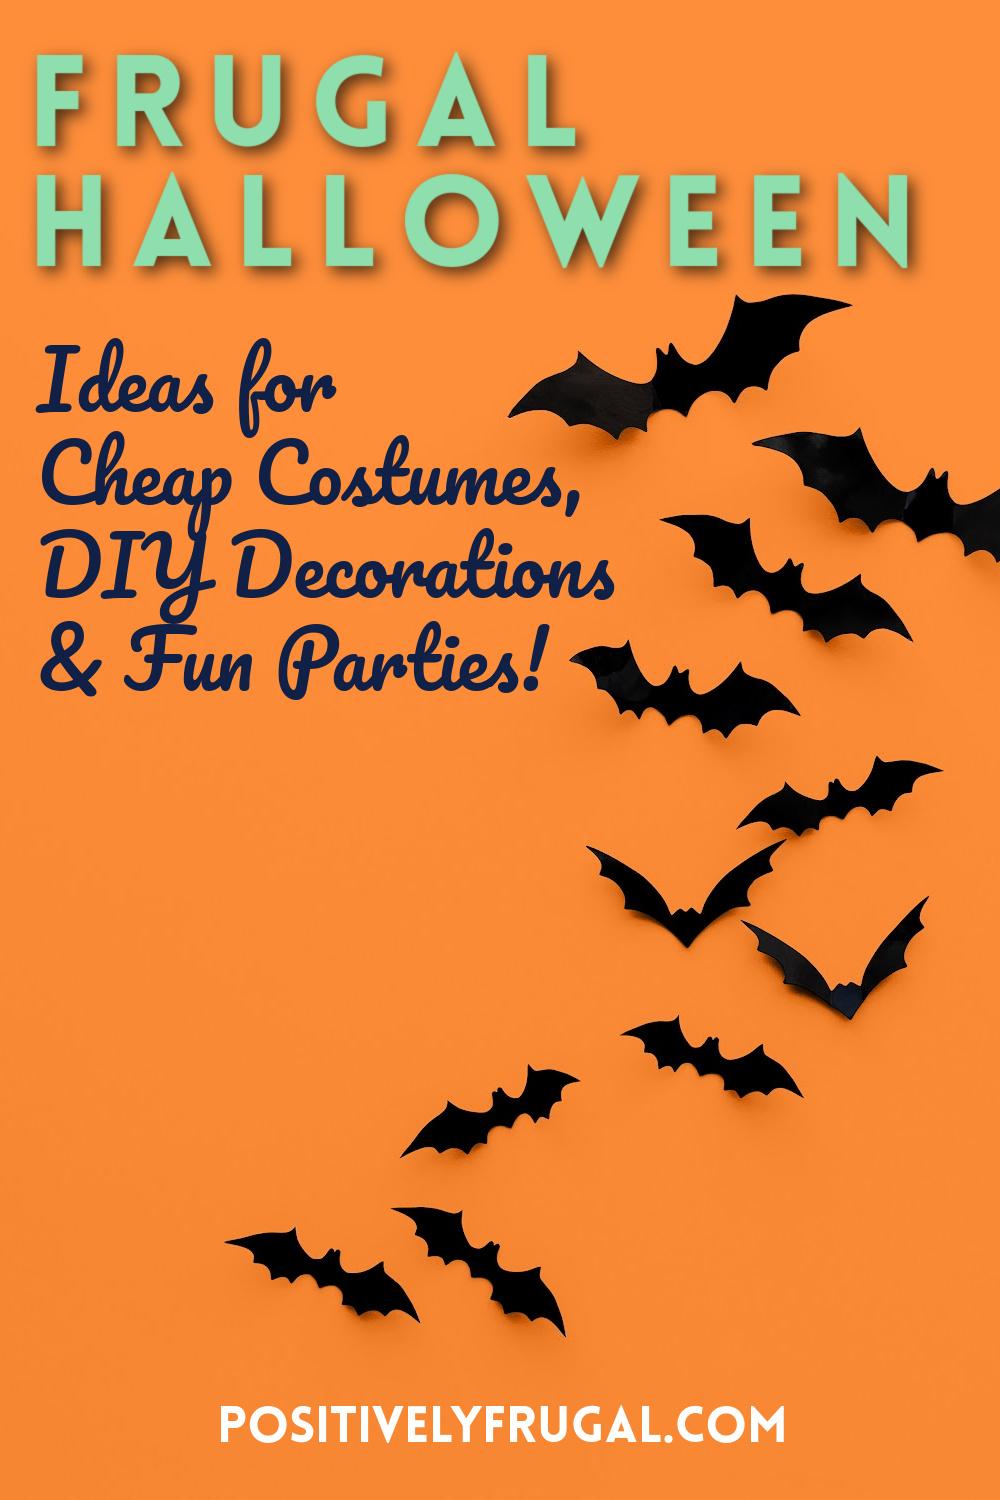 Frugal Halloween Ideas by PositivelyFrugal.com